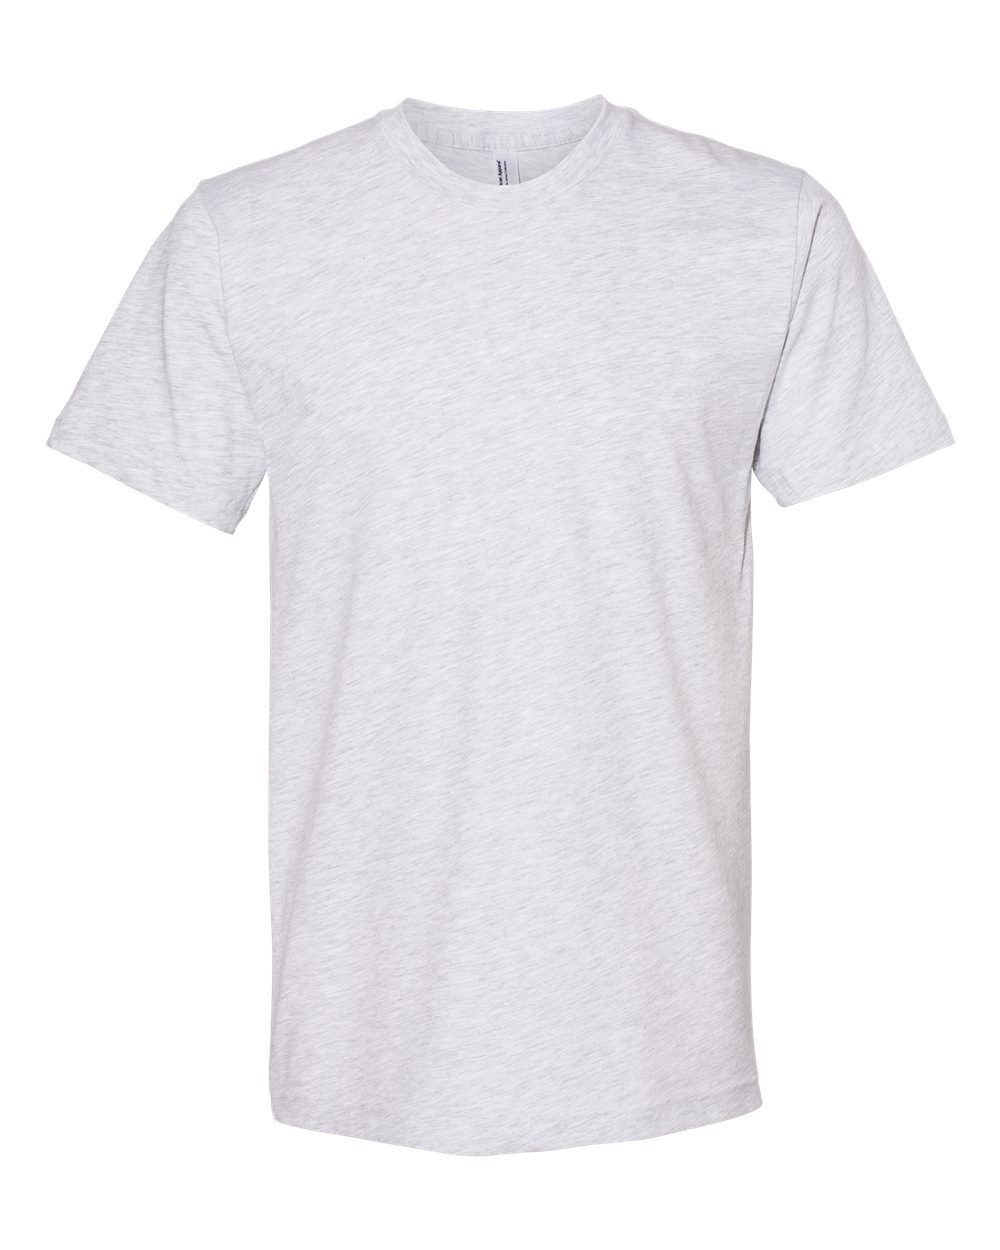 American Apparel Mens Fine Jersey Tee T Shirt Blank 2001W up to 3XL | eBay